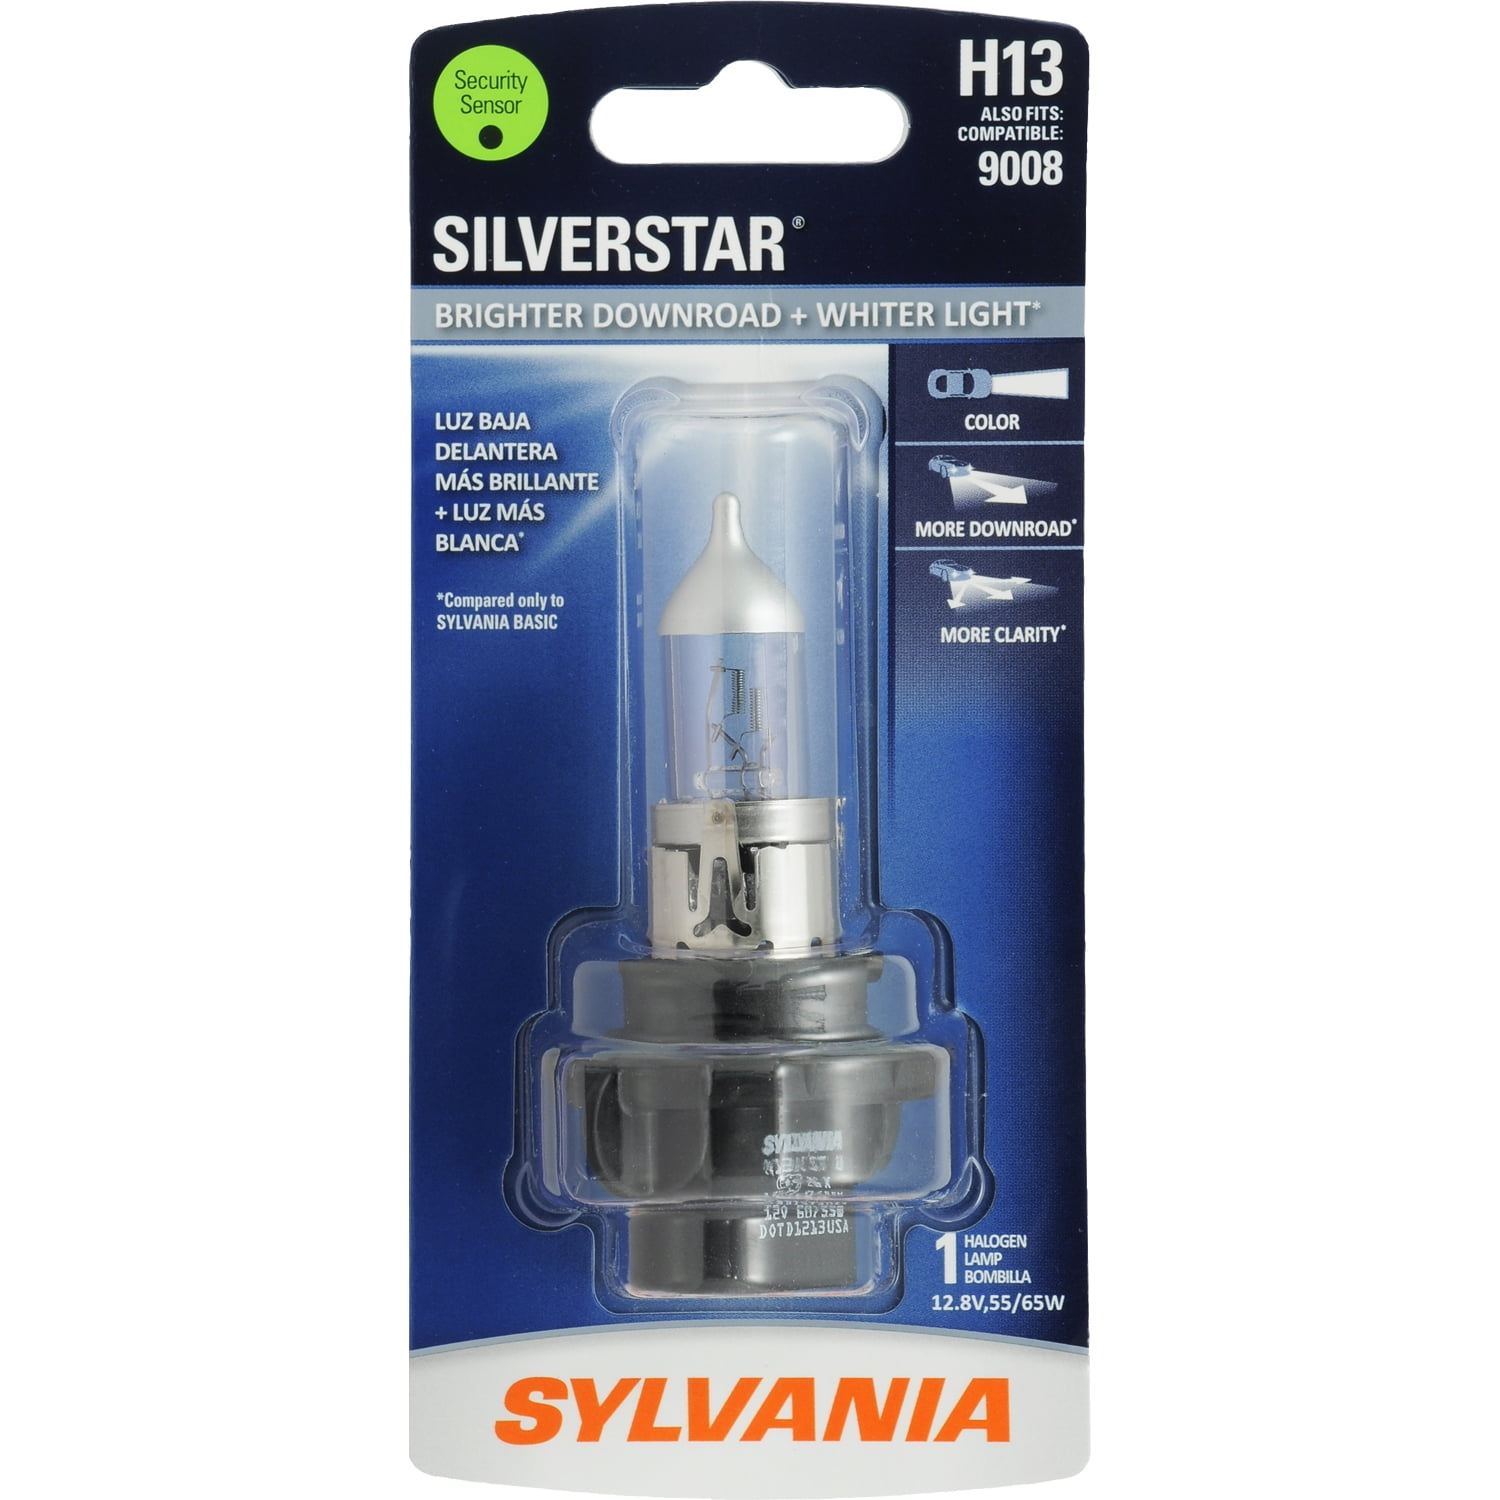 Sylvania H13 SilverStar Auto Halogen Headlight Bulb, Pack of 1.